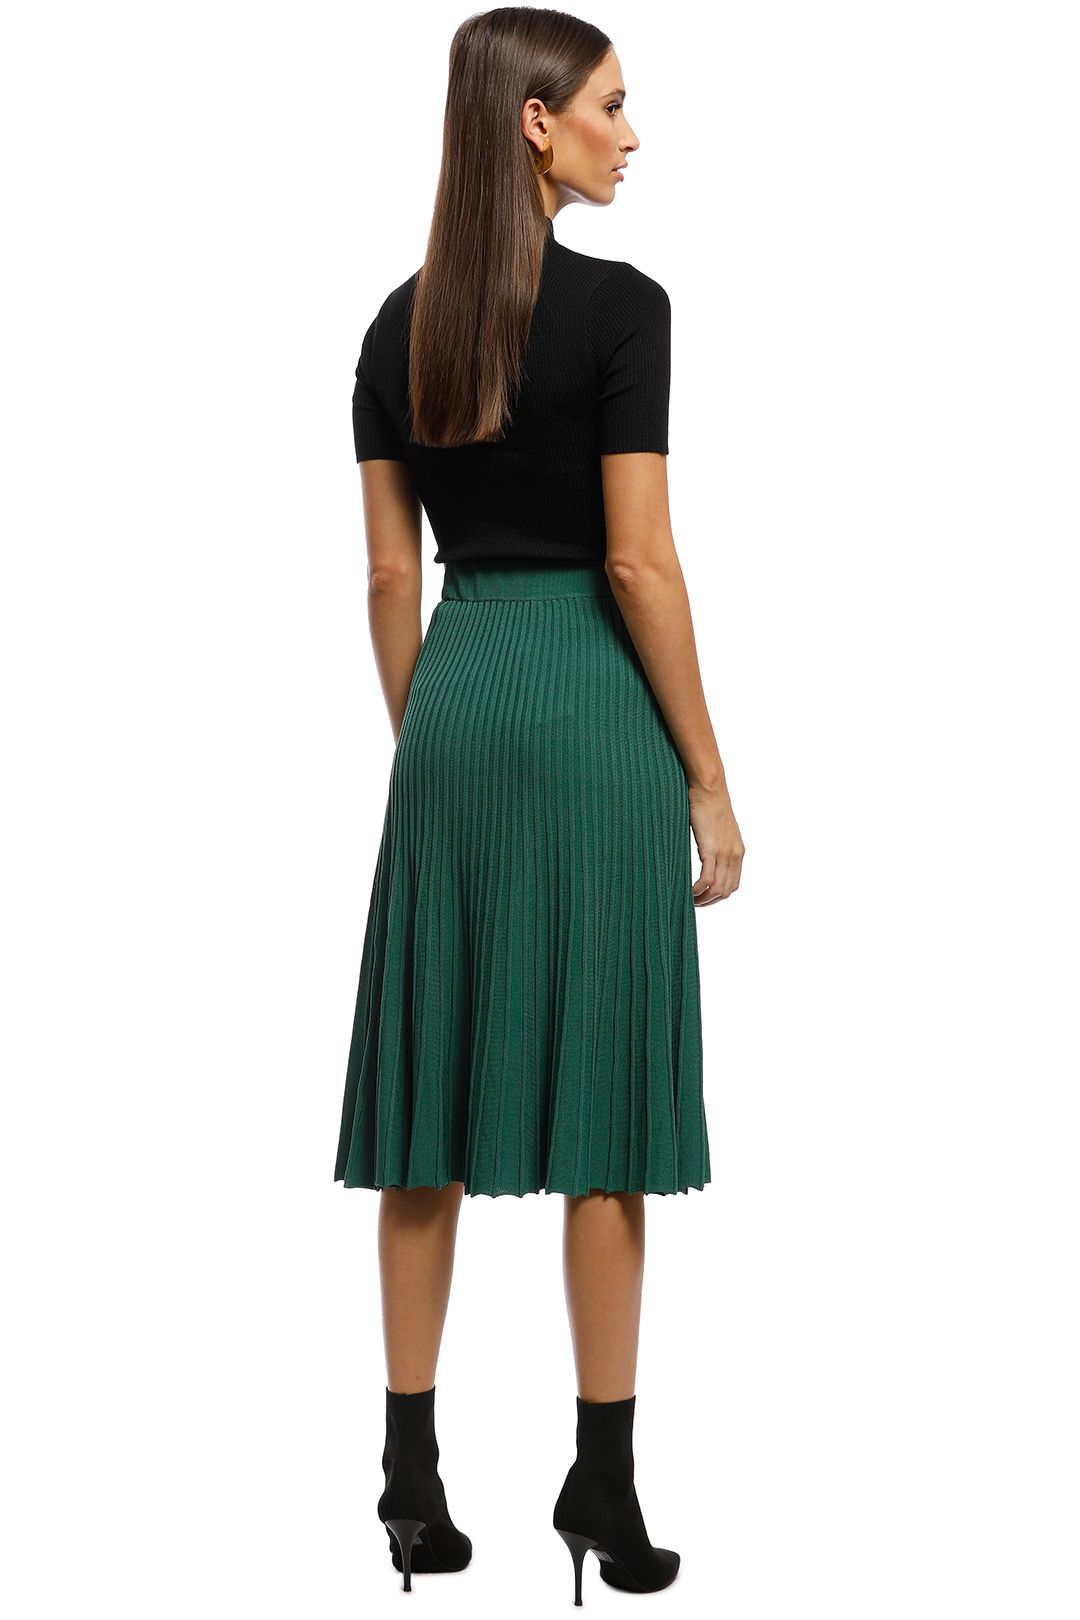 Saba - Ruby Rib Knit Skirt - Green - Back